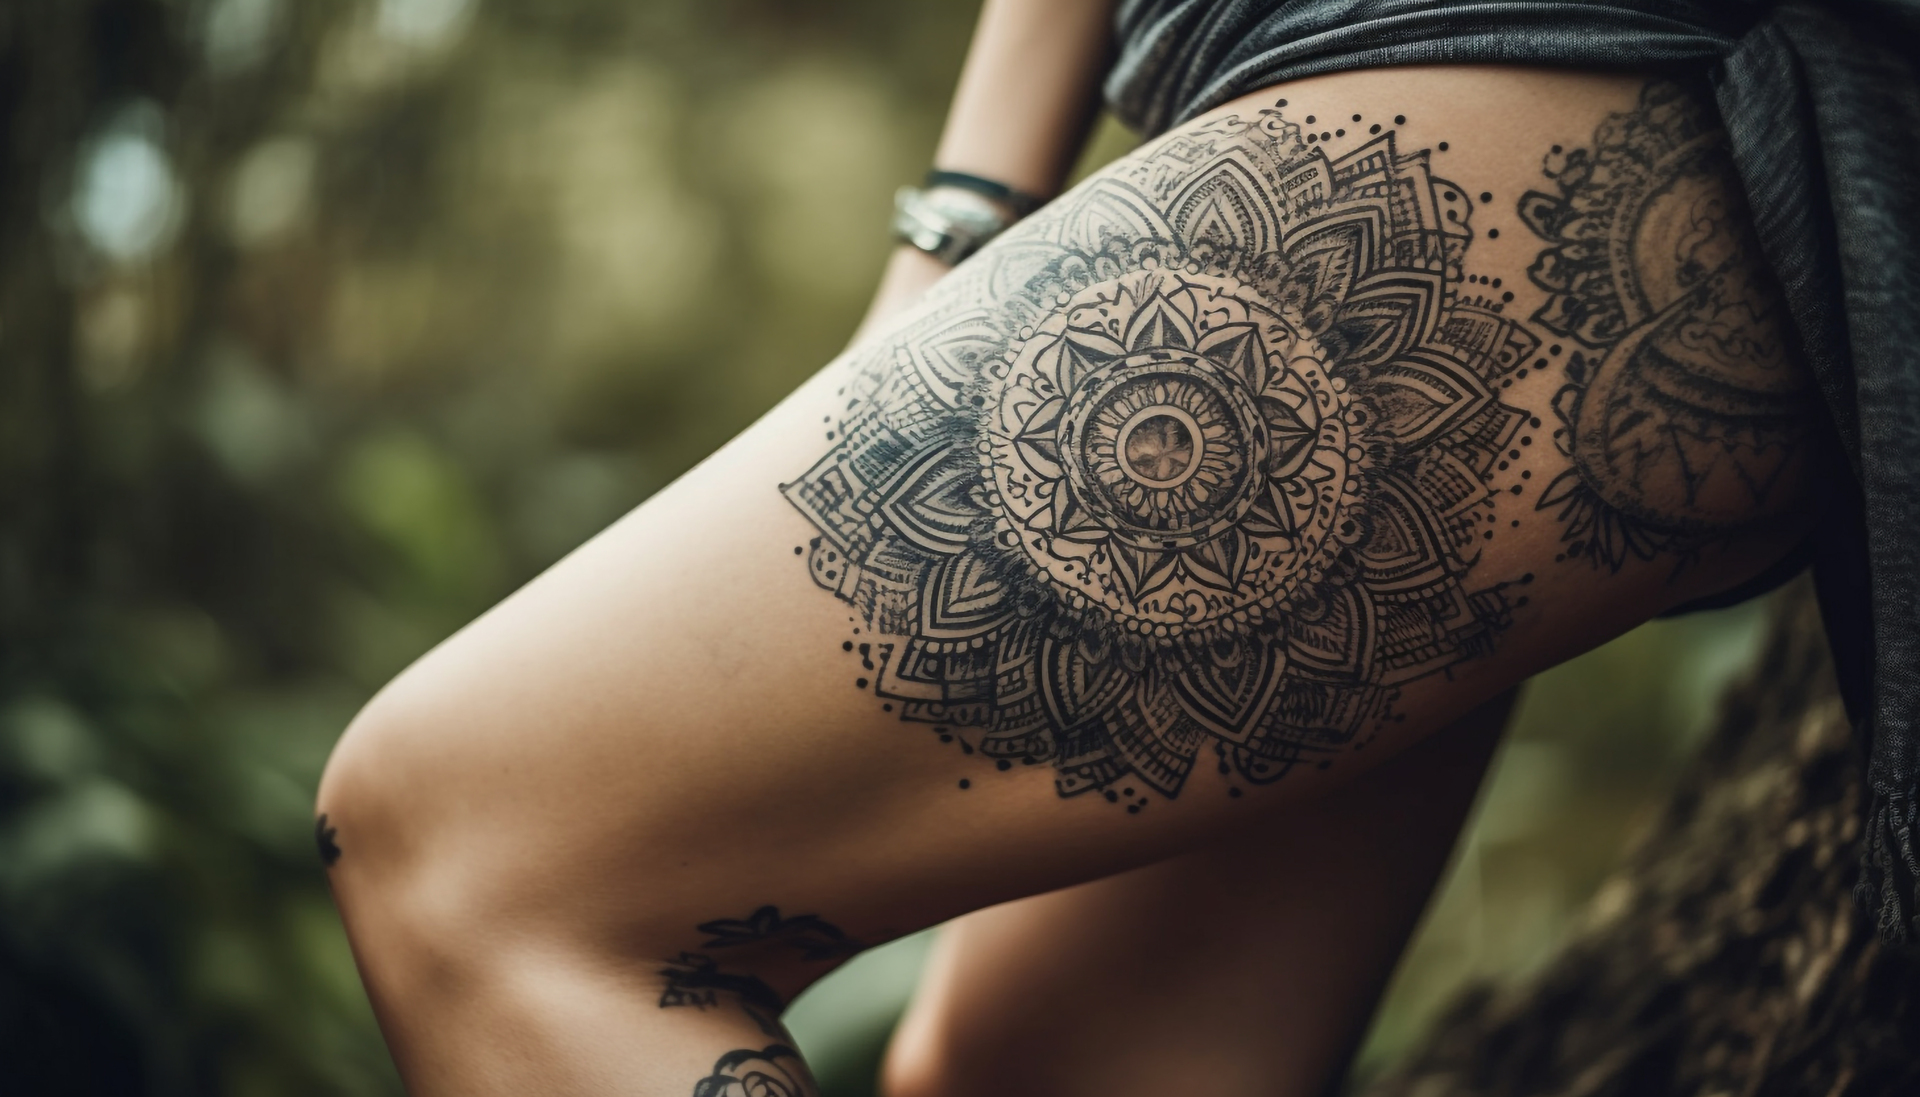 Tatuaż mandala na udzie kobiety ukazanym na tle zieleni